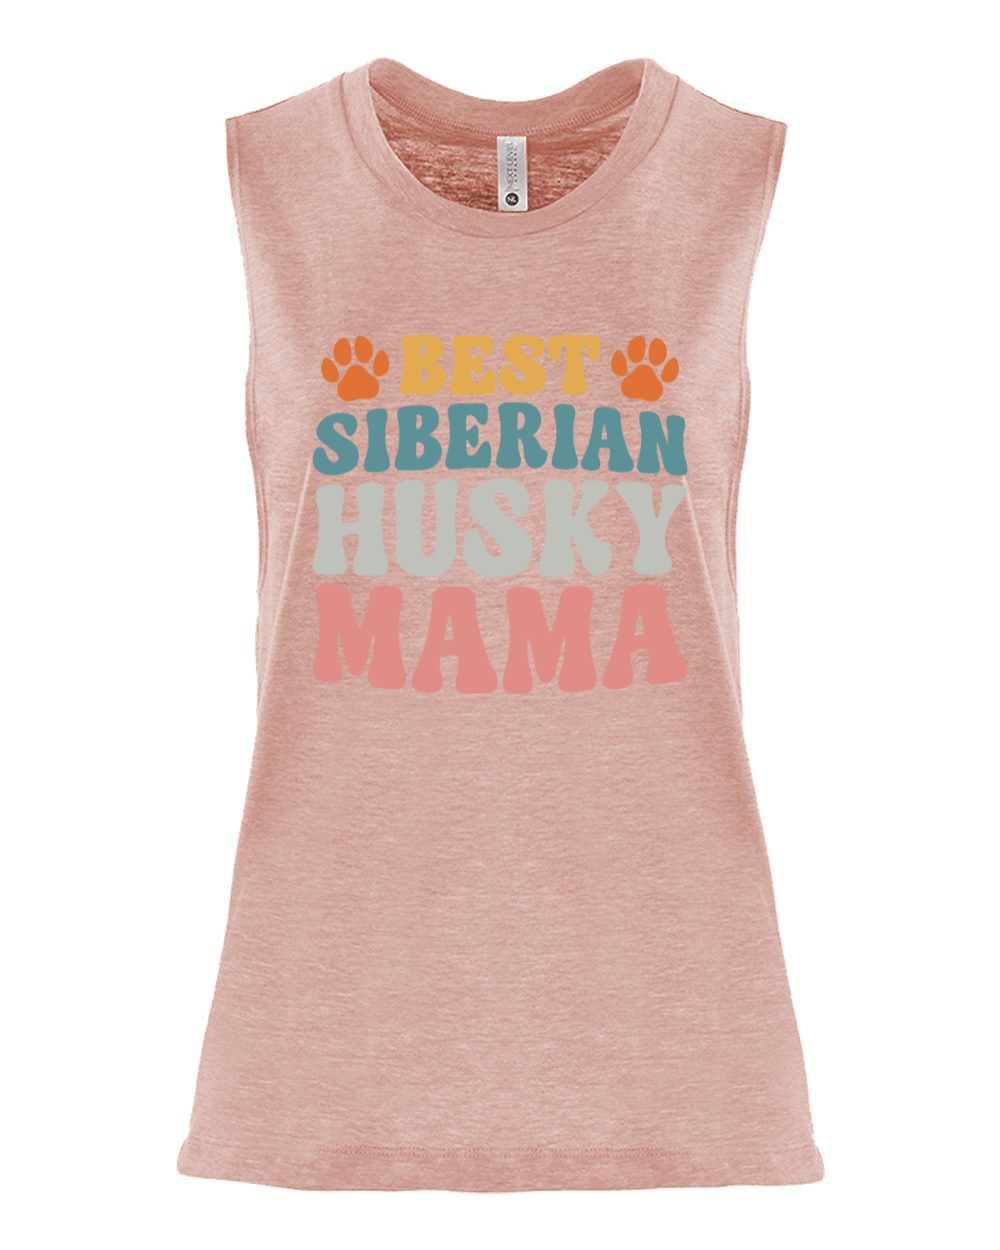 Best Siberian Husky Mama Colored Print Muscle Tank